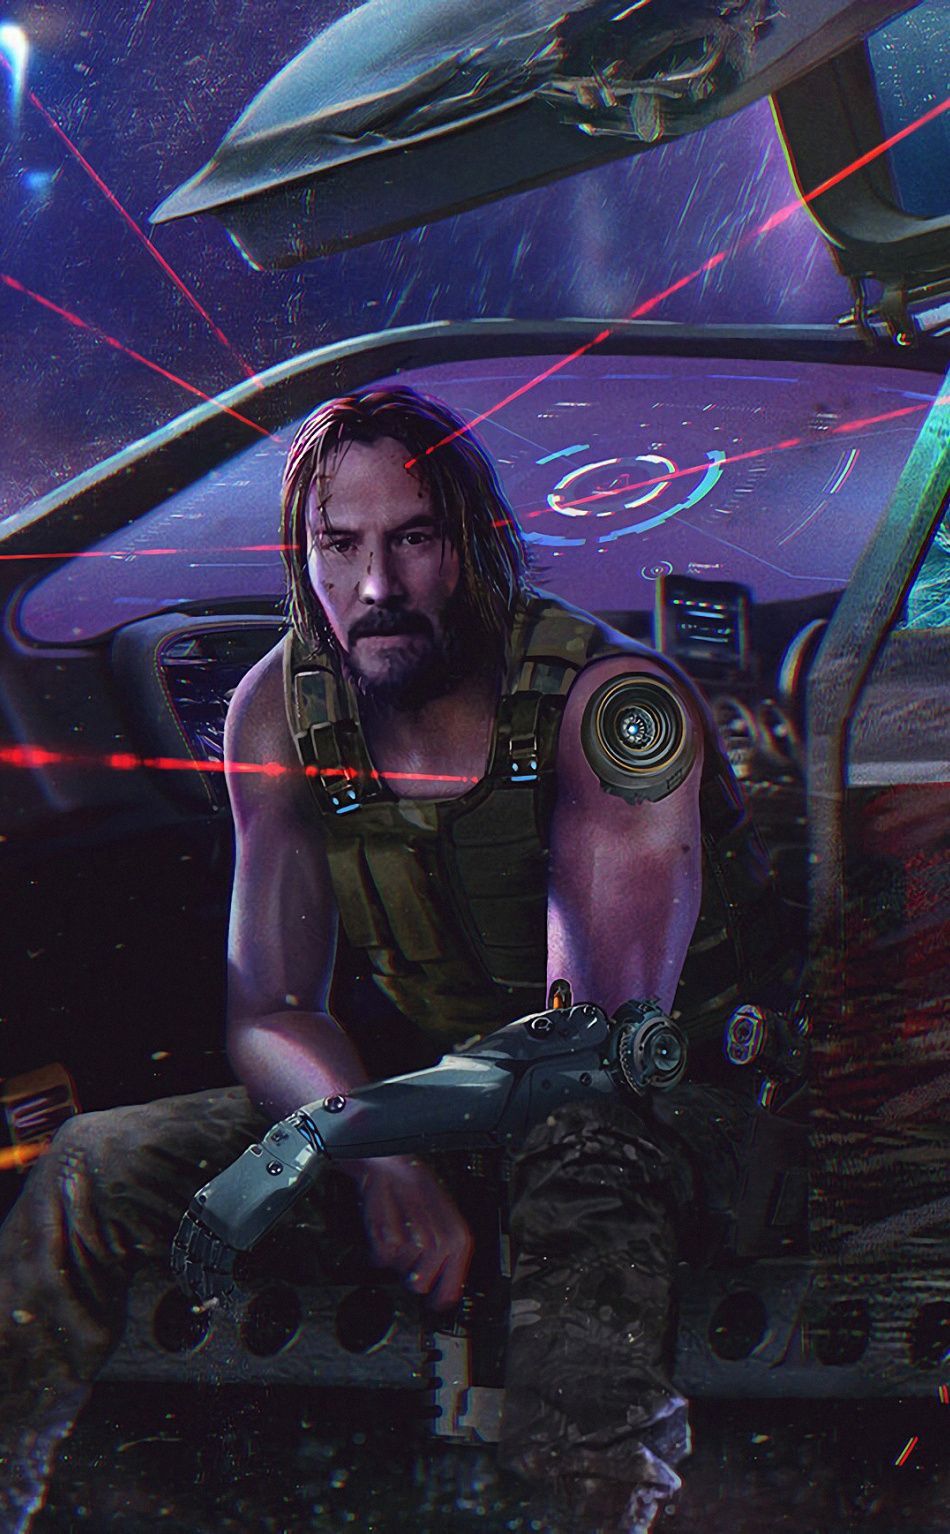 Cyberpunk 2077 Keanu Reeves Video Game 2020 Wallpapers Wallpaper Cave 9136